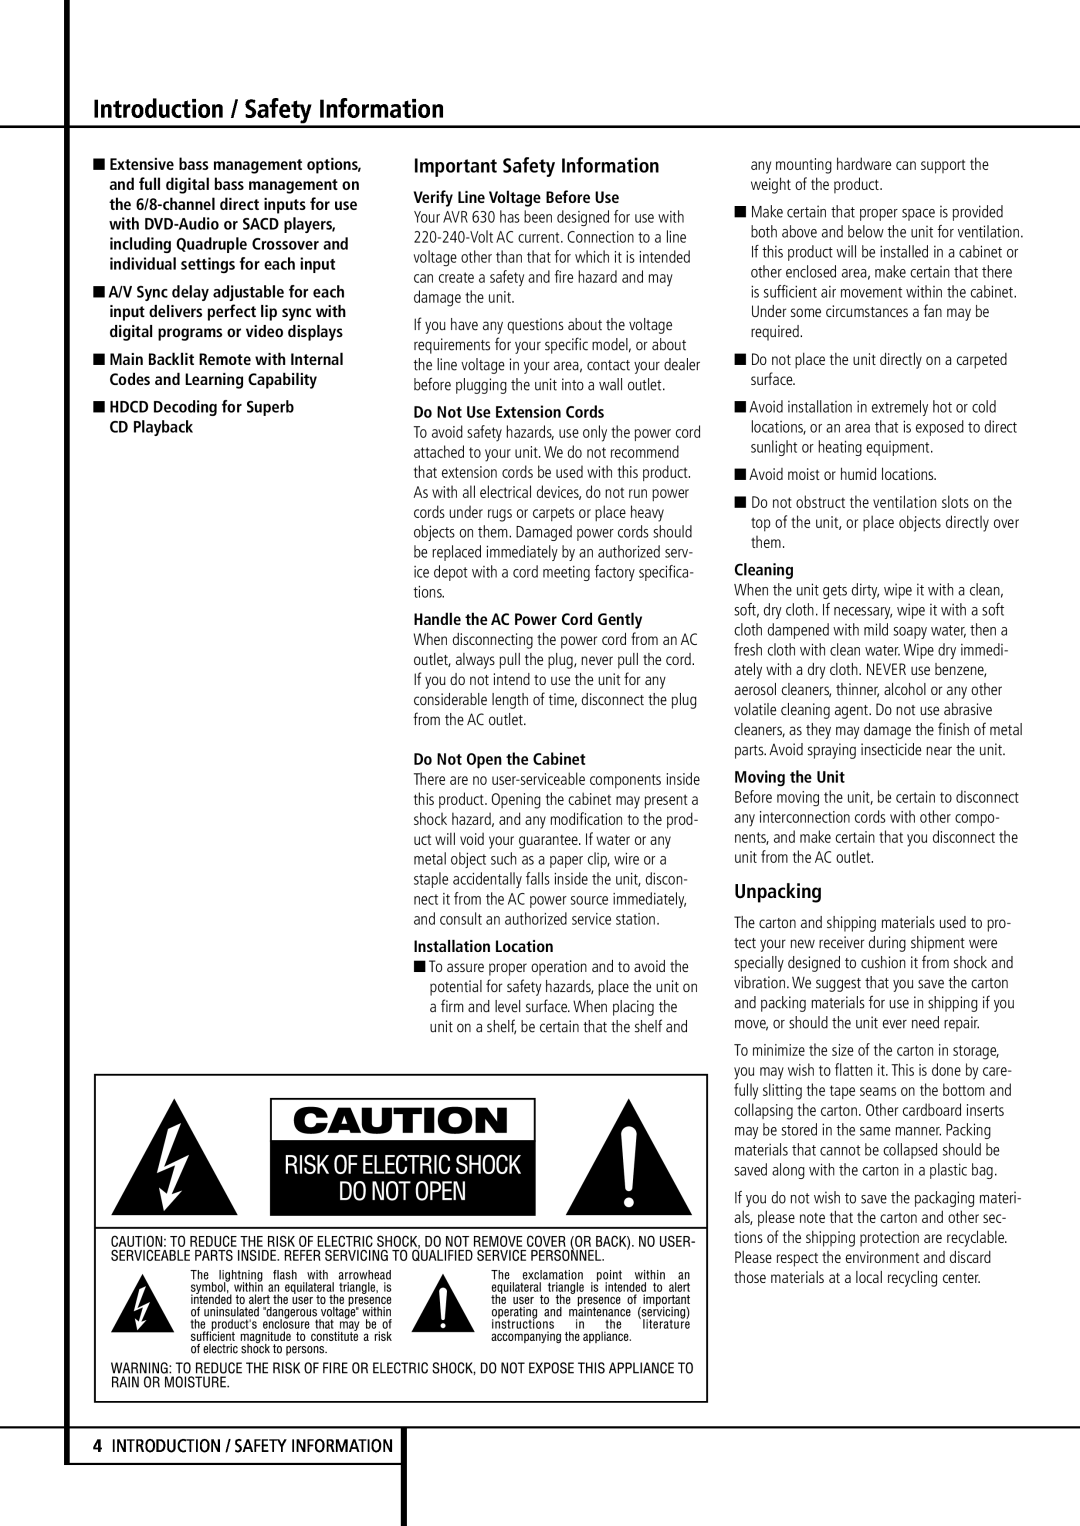 Harman-Kardon AVR 630 Introduction / Safety Information, Important Safety Information, Unpacking, Do Not Open the Cabinet 